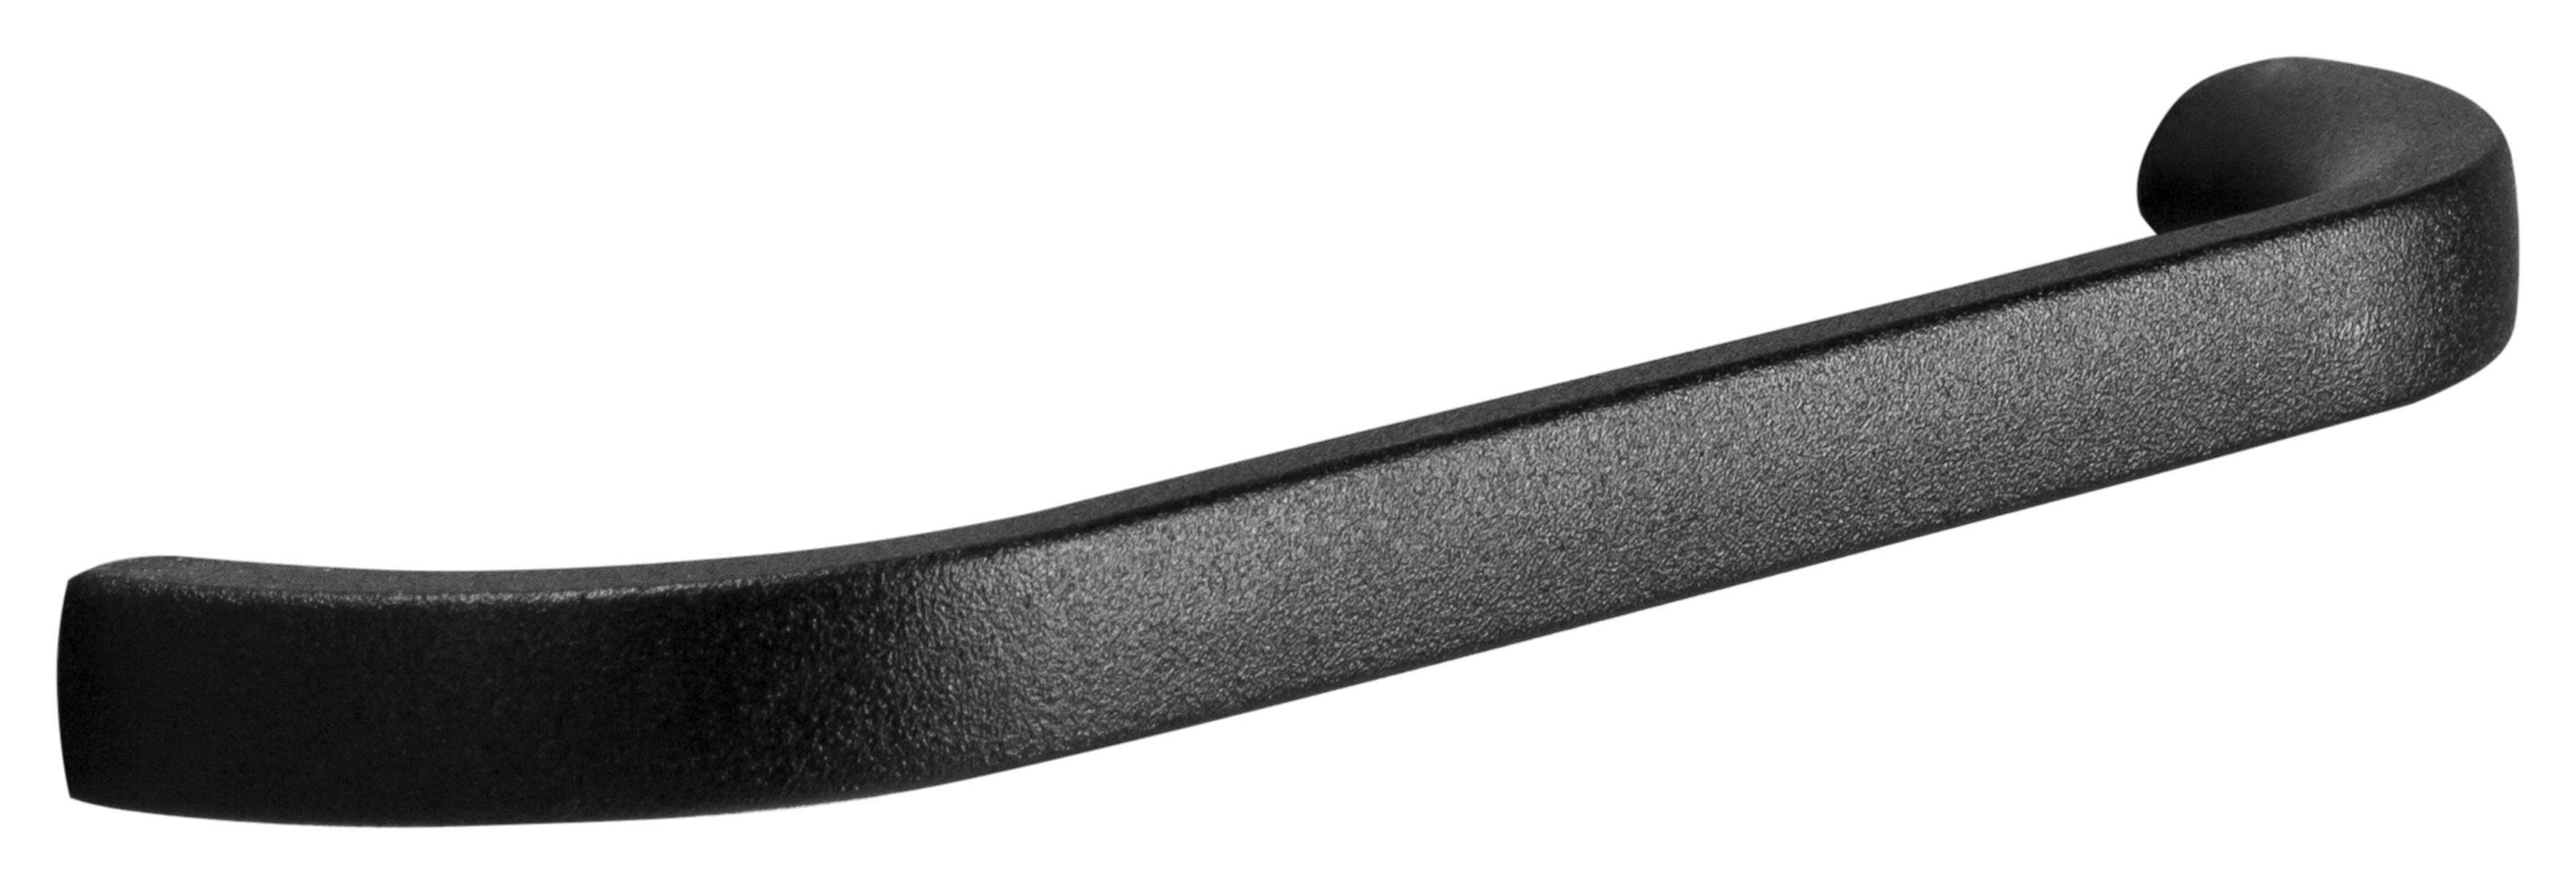 OPTIFIT Backofen/Kühlumbauschrank Elga mit Soft-Close-Funktion, basaltgrau höhenverstellbaren cm | Füßen, 60 Breite basaltgrau/basaltgrau